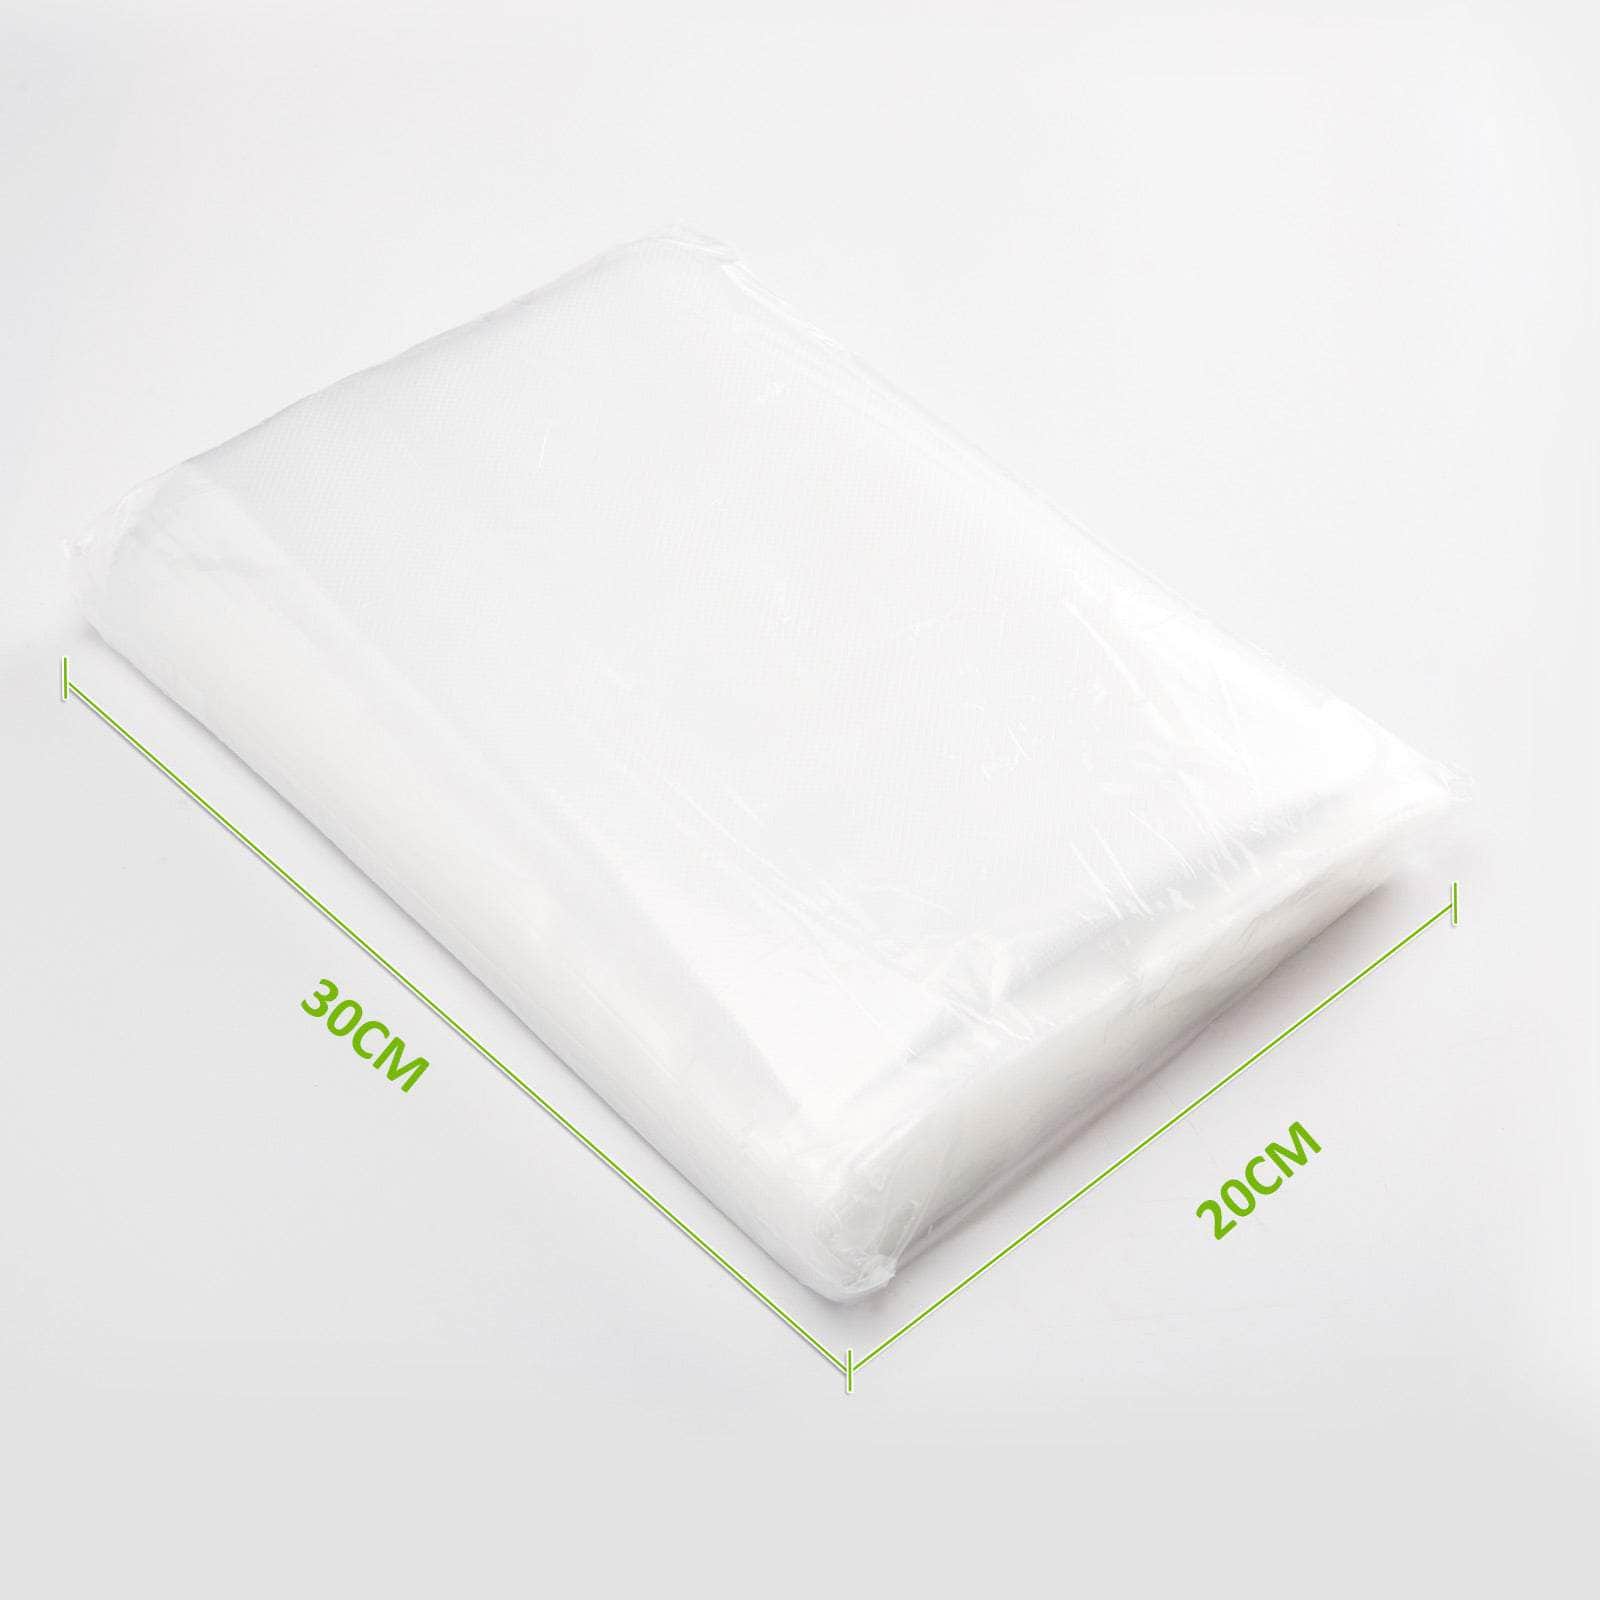 200 X Vacuum Food Sealer 20Cm X 30Cm Pre-Cut Bags